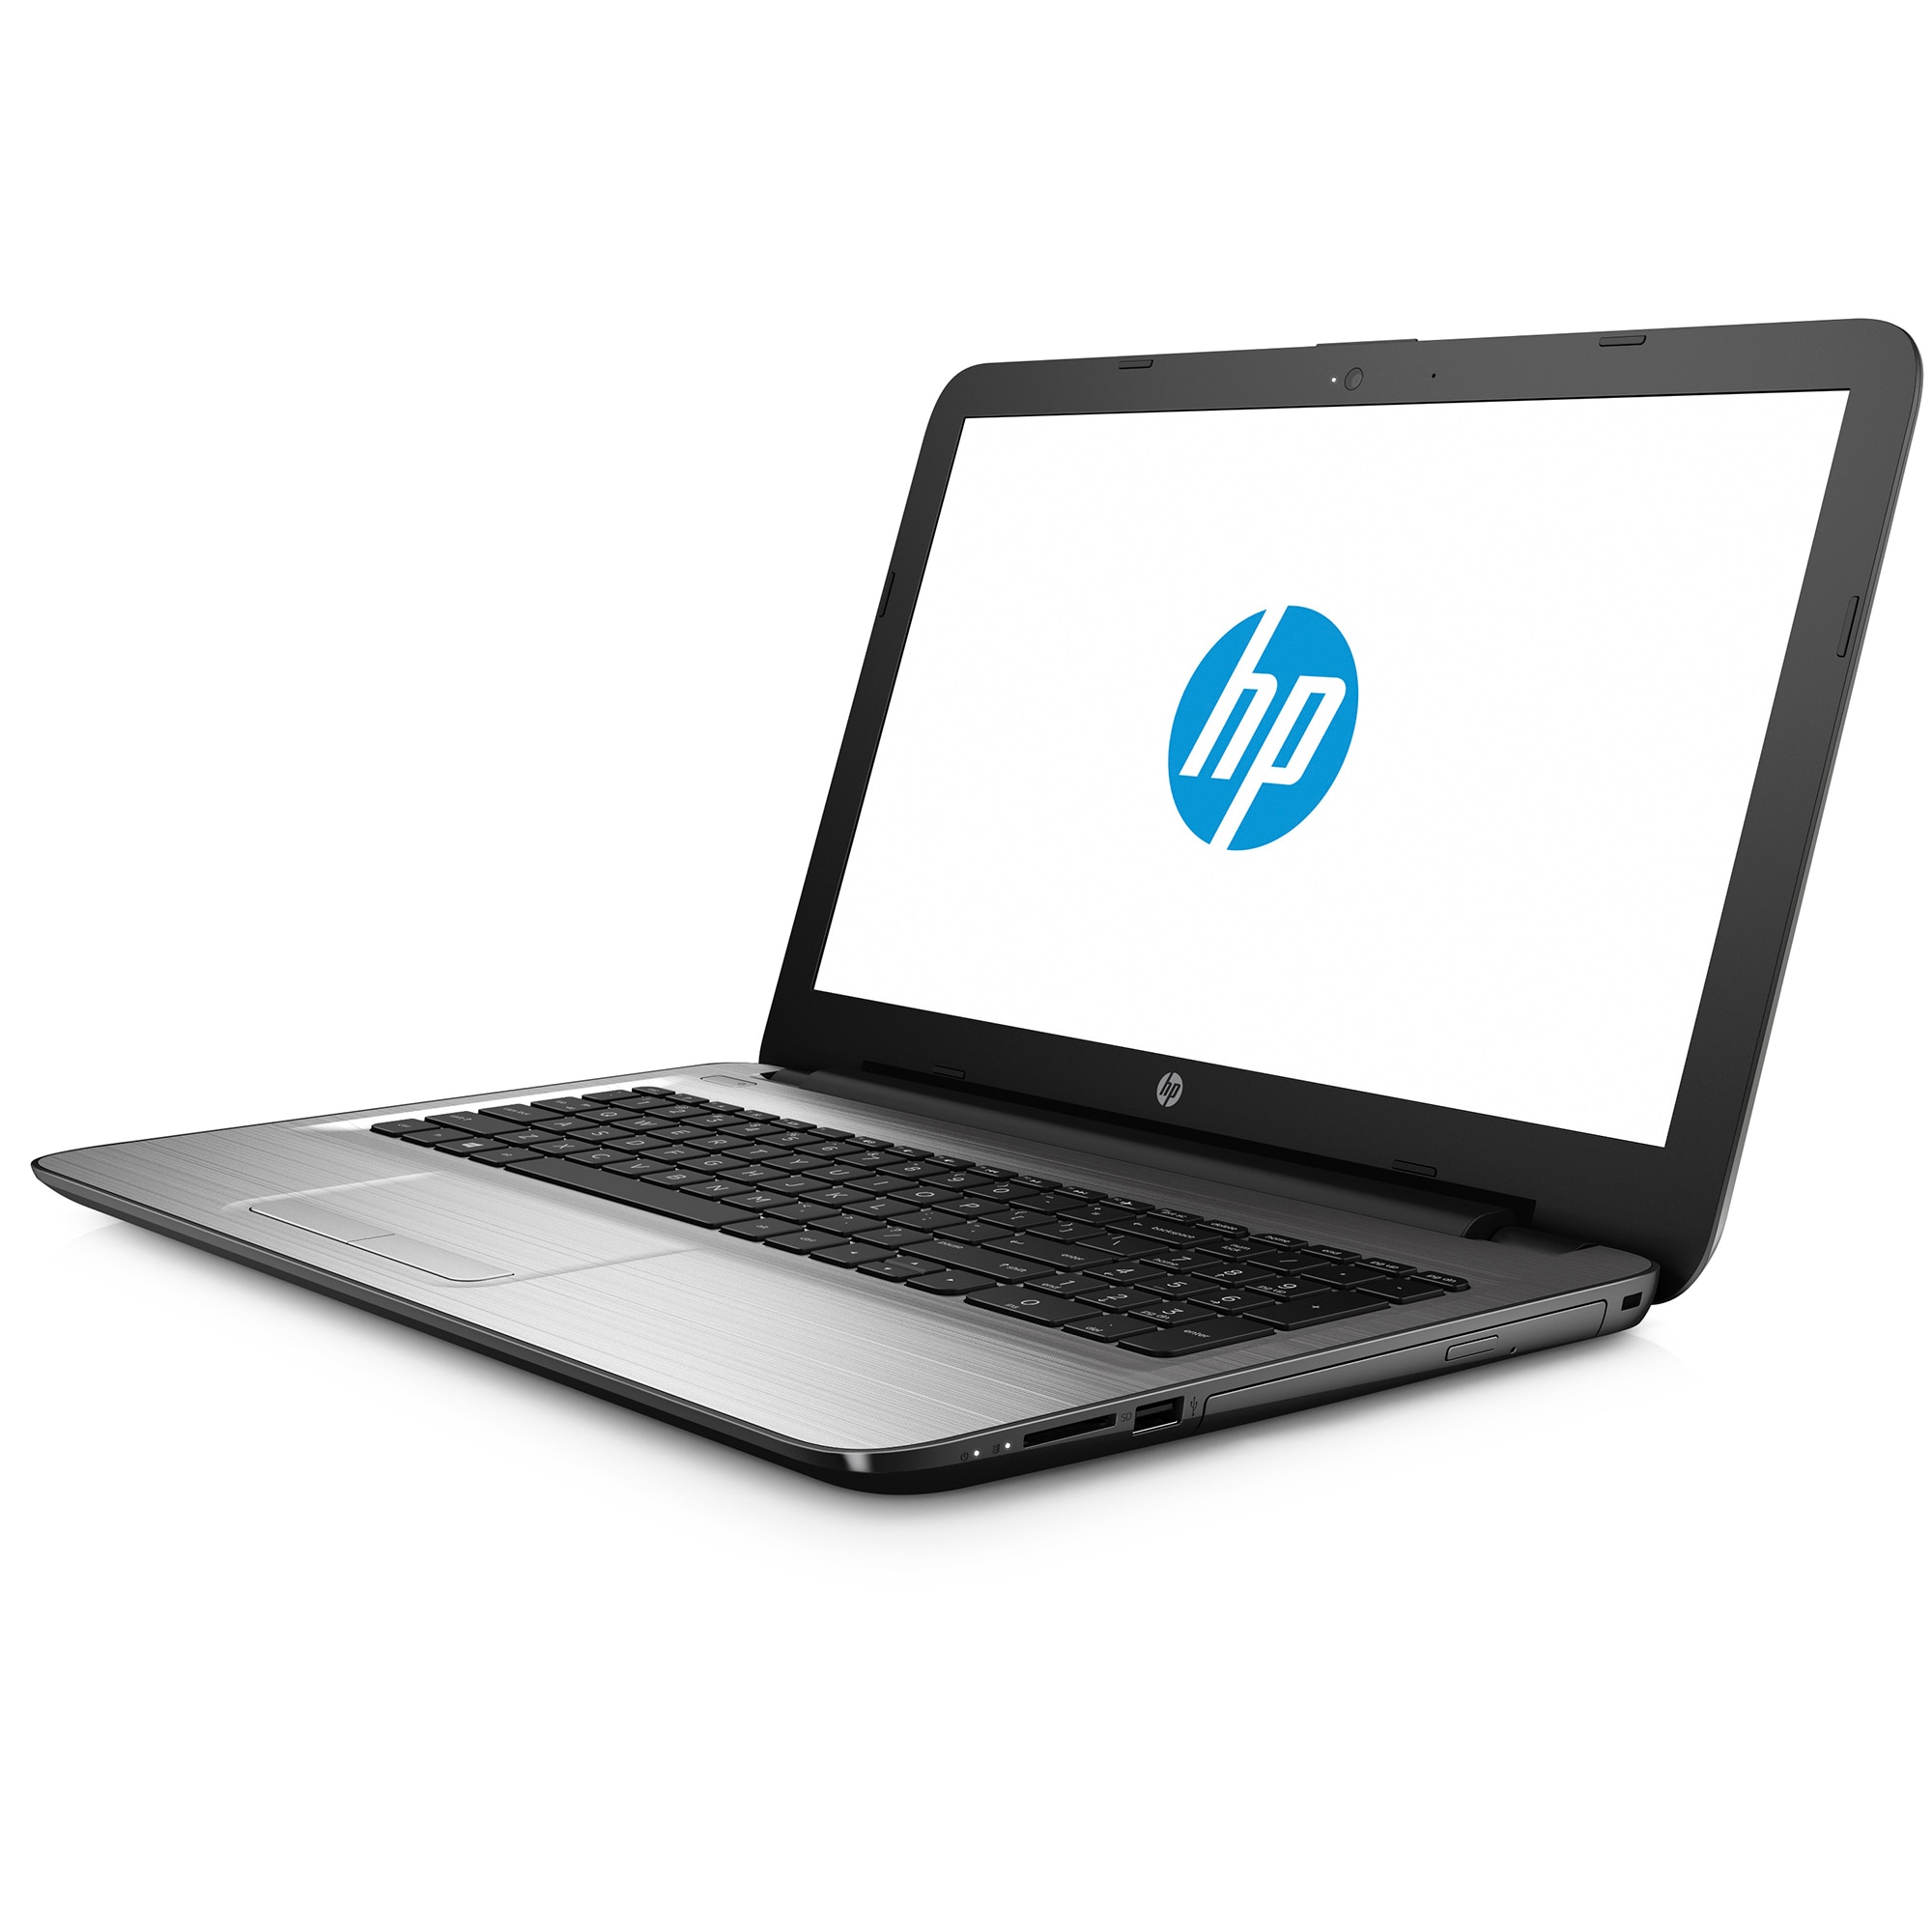 Peck cling scar Laptop HP 250 G5 cu procesor Intel® Core™ i5-6200U 2.3Ghz, 15.6'', Full HD,  8GB, 256GB SSD, Intel® HD Graphics 520, Free DOS, Silver - eMAG.ro